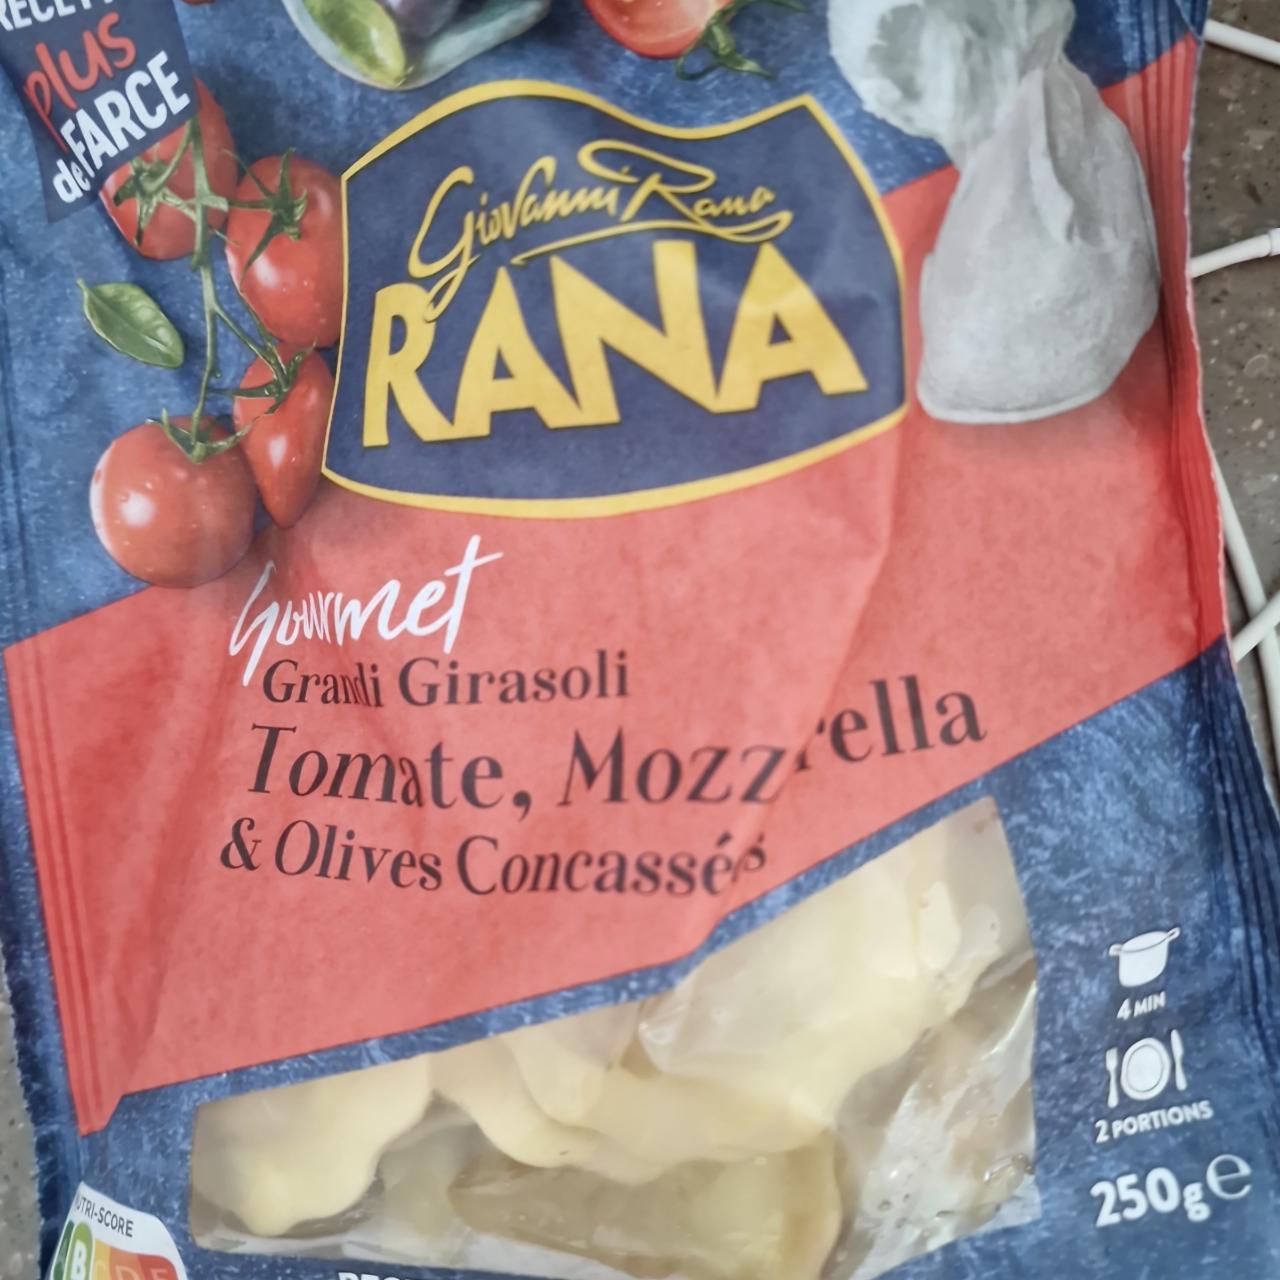 Fotografie - Gourmet grandi girasoli Tomate, Mozzarella & Olives RANA